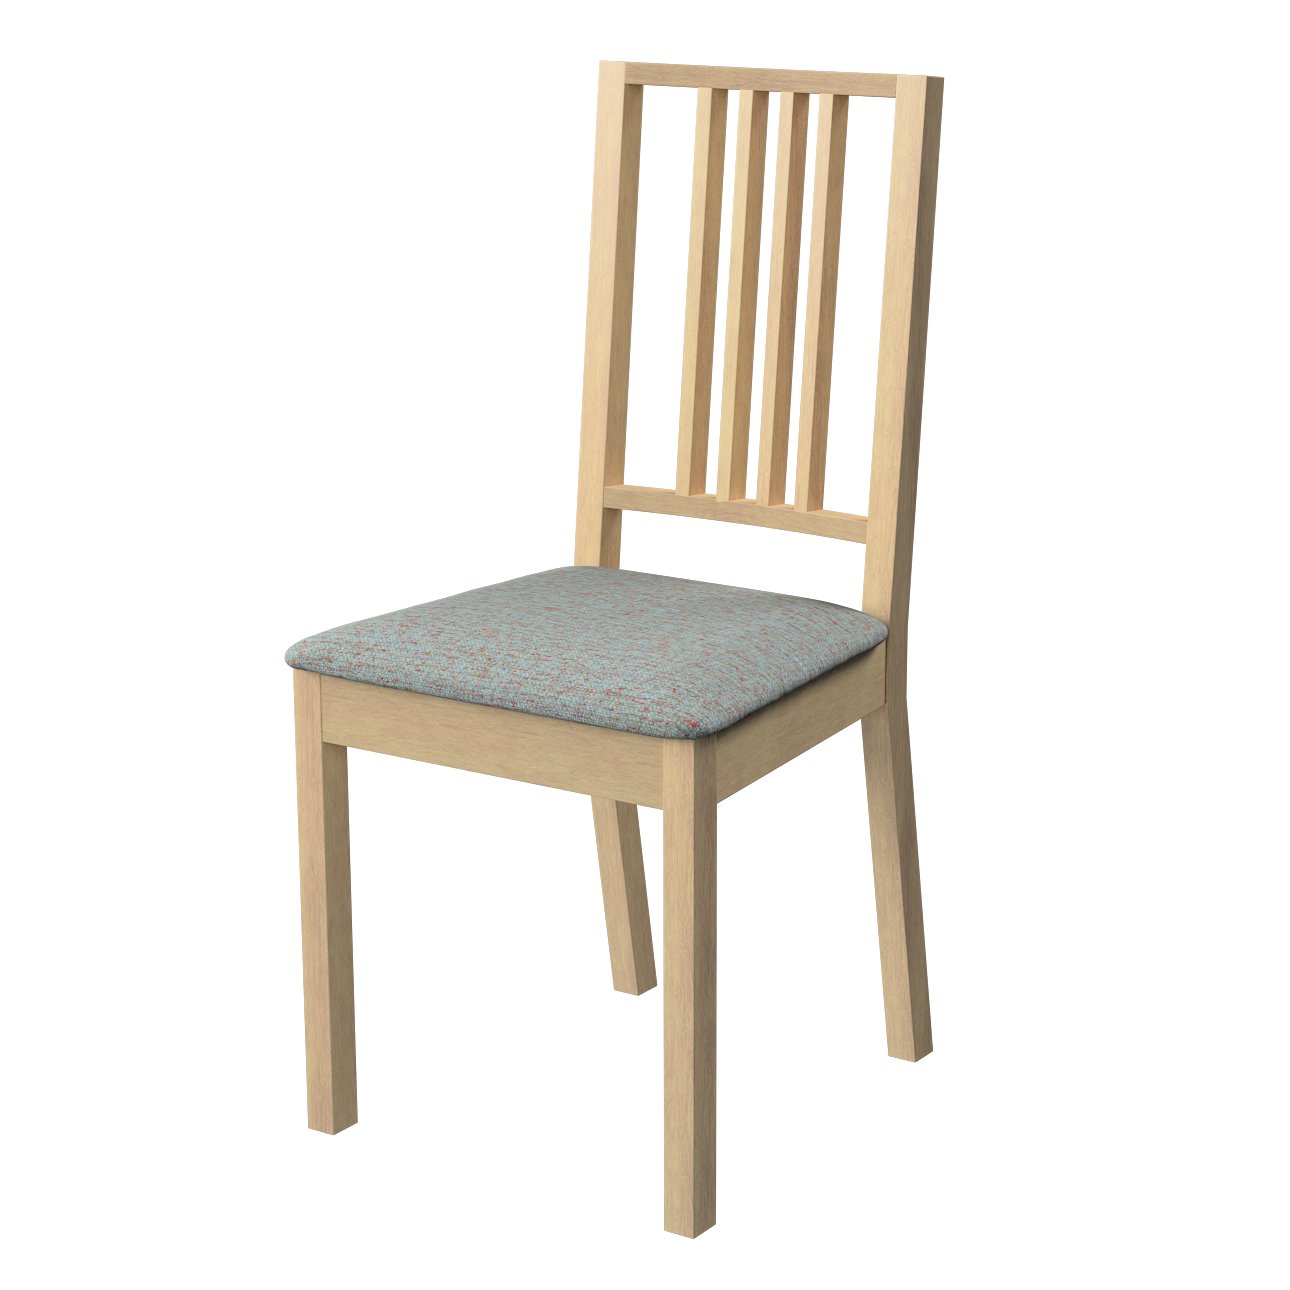 Dekoria Potah na sedák židle Börje, modrá melanž, potah sedák židle Börje, Madrid, 162-32